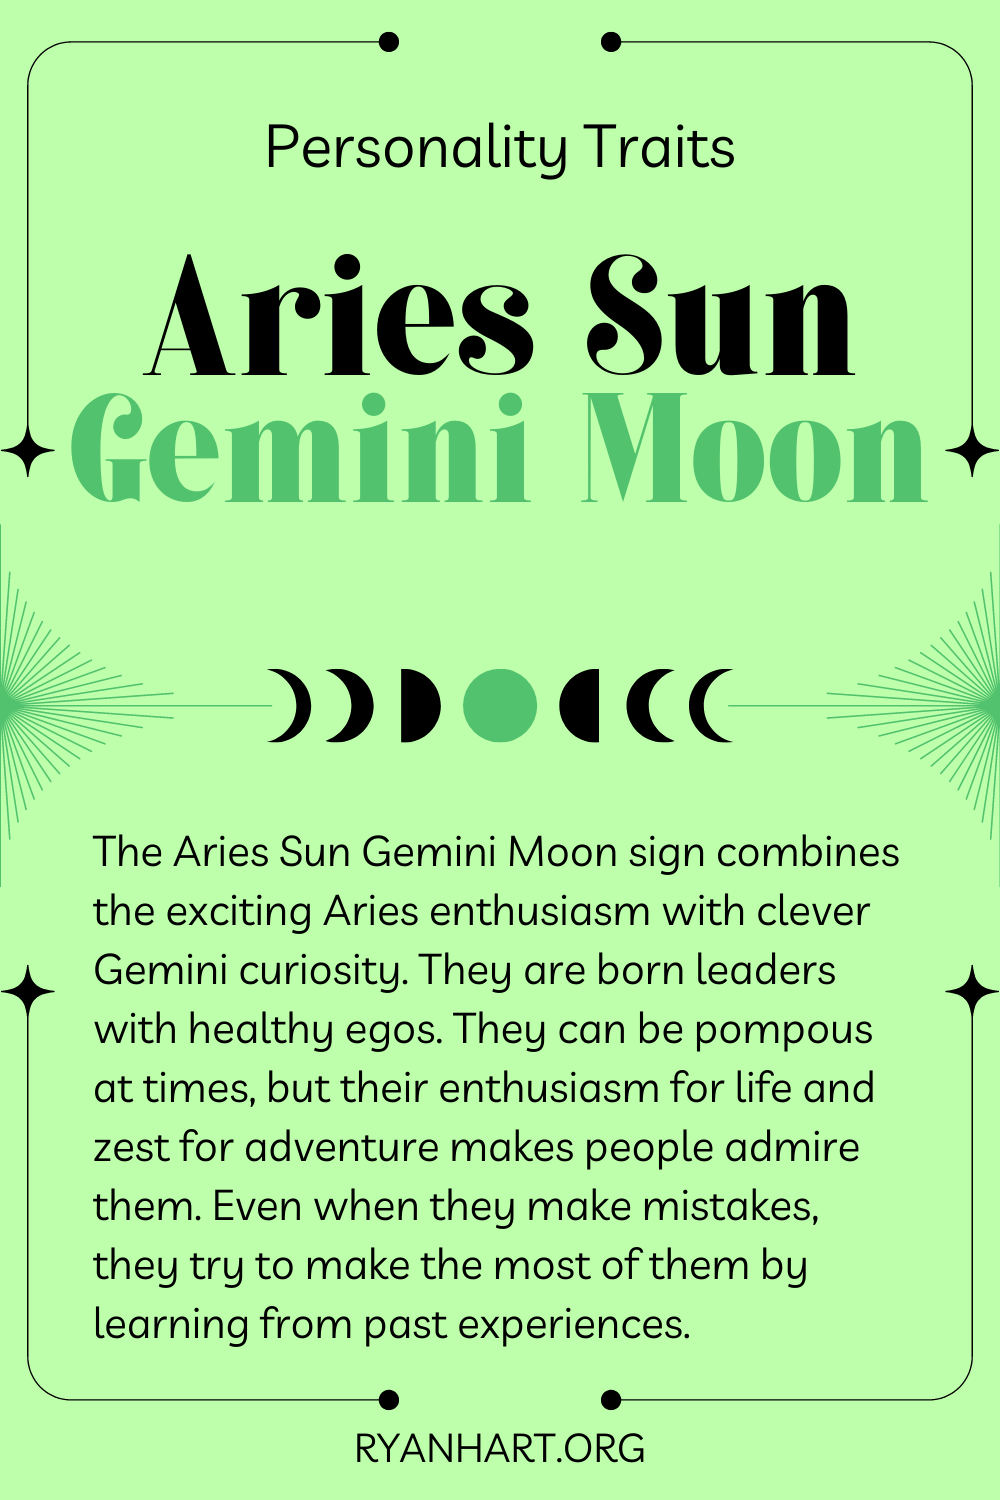 Aries Sun Gemini Moon Description